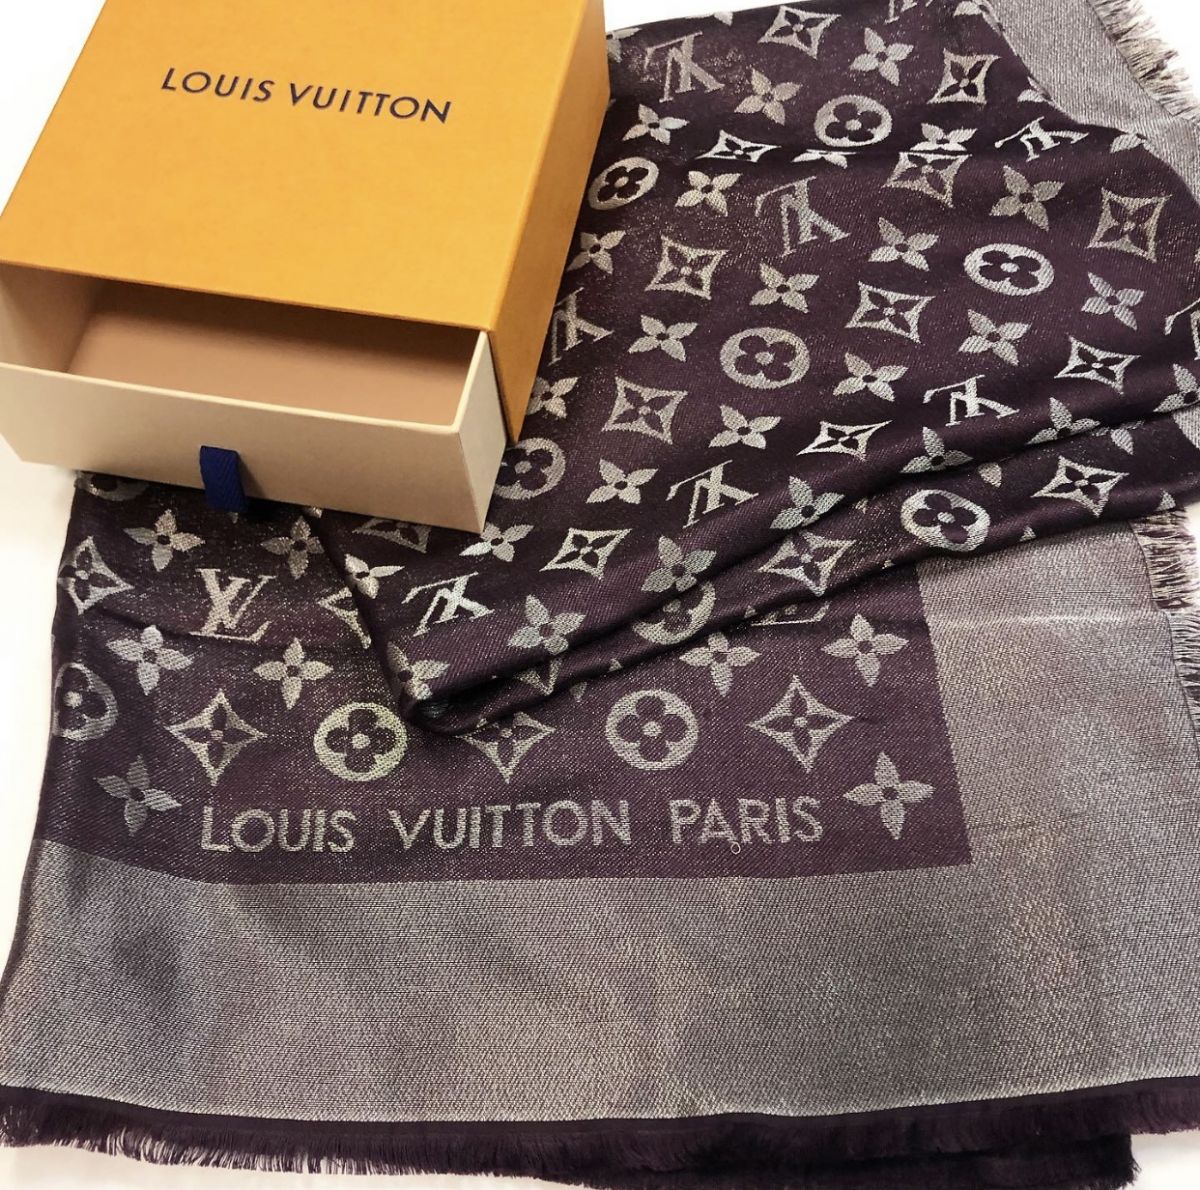 Палантин /люрекс/ Louis Vuitton размер 140/140 цена 23 078 руб /в коробке/ 